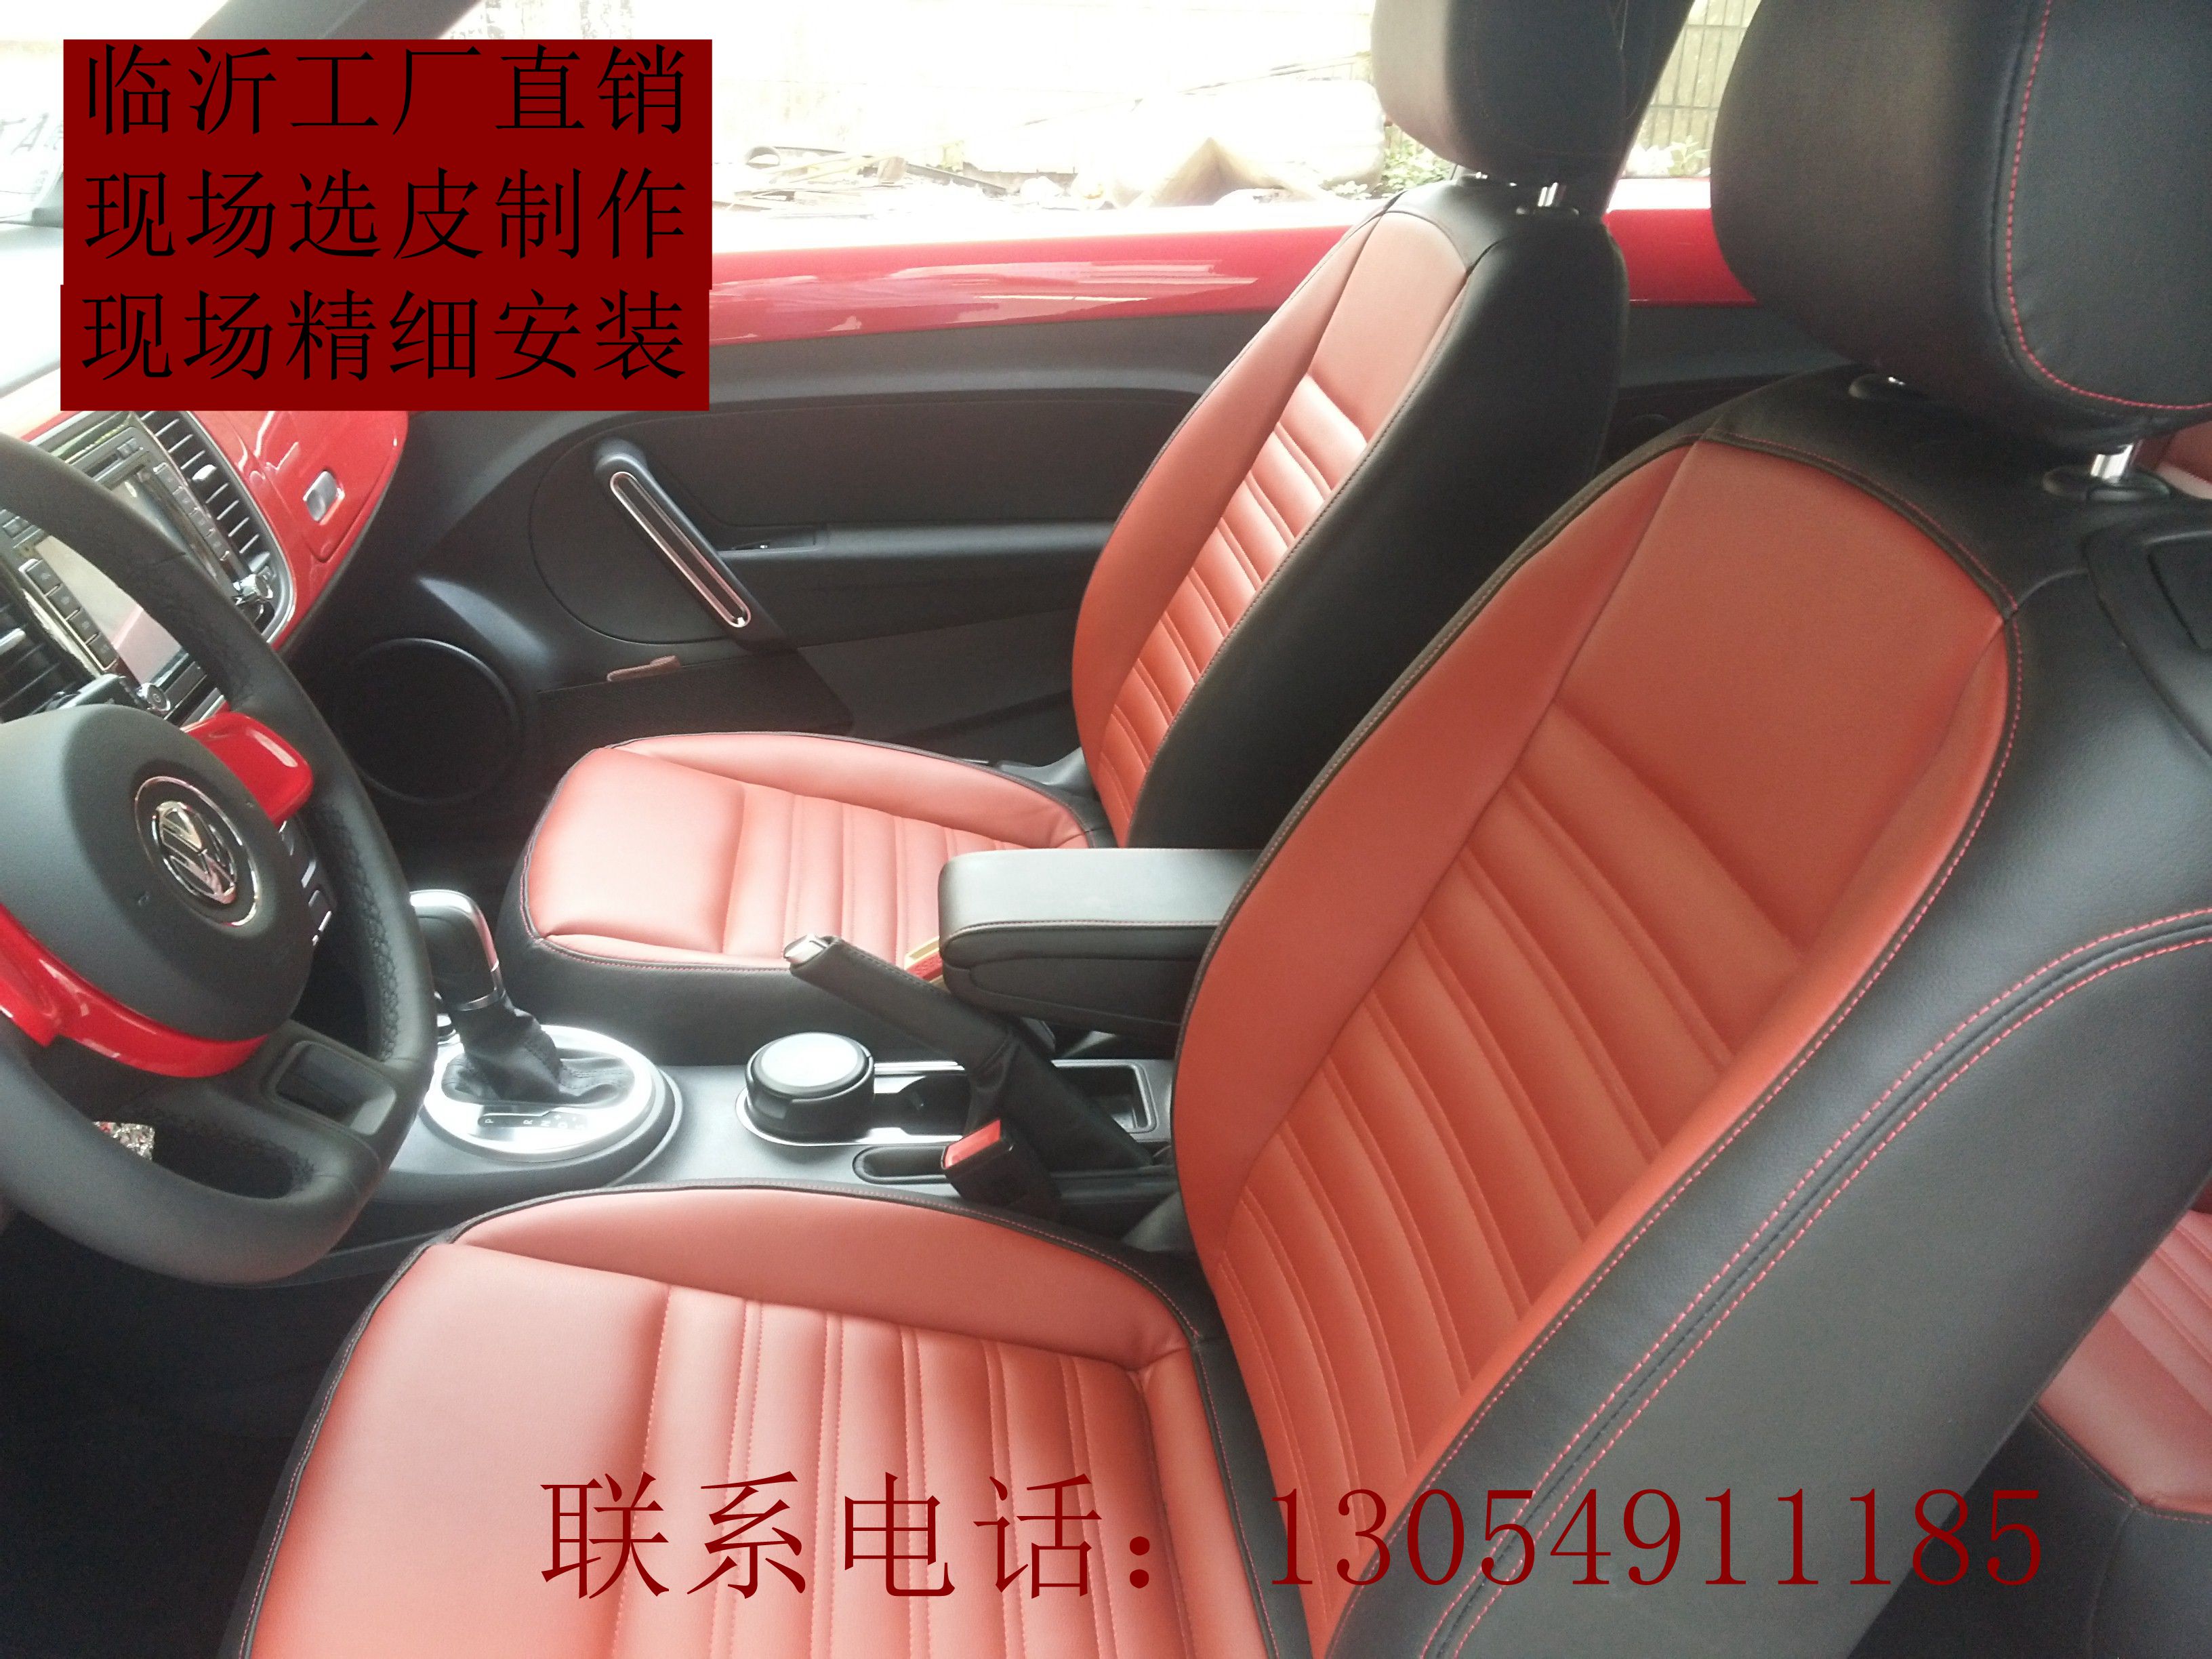 Linyi installation car genuine leather seat bag genuine leather seat bag seat cover field selection bag car genuine leather seat cover-Taobao